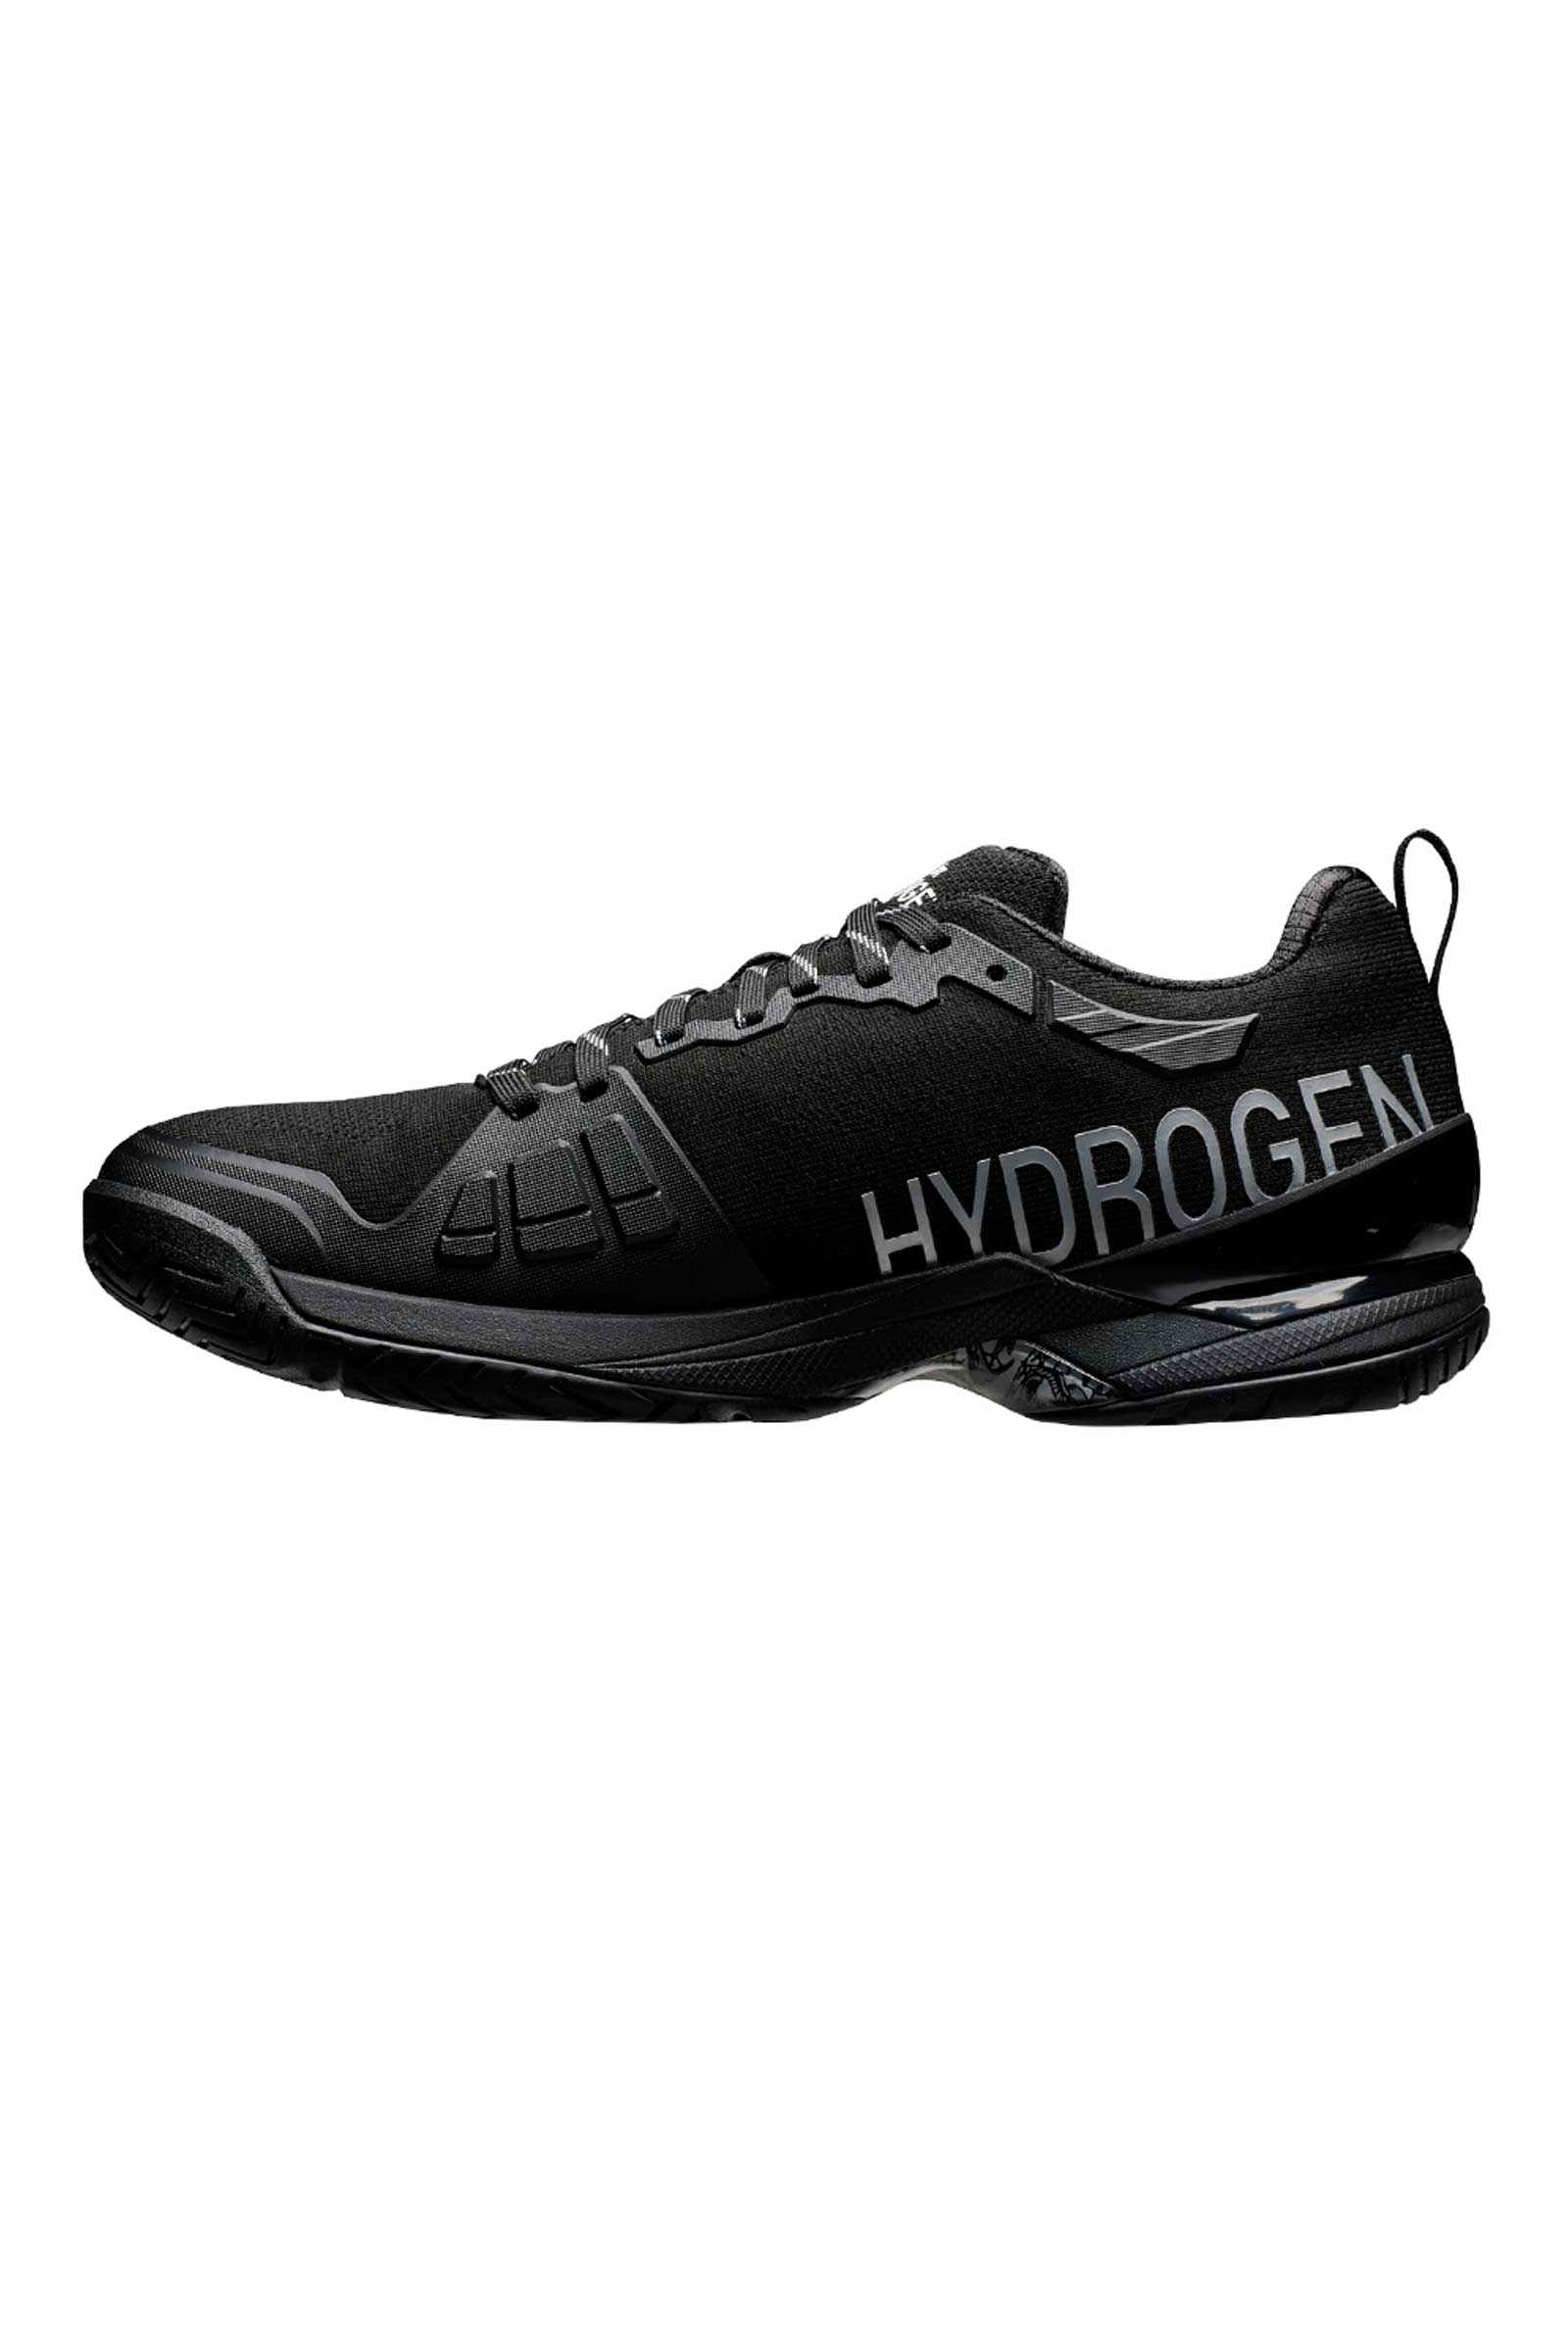 TENNIS SHOES PRINCE BY HYDROGEN - BLACK - Abbigliamento sportivo | Hydrogen